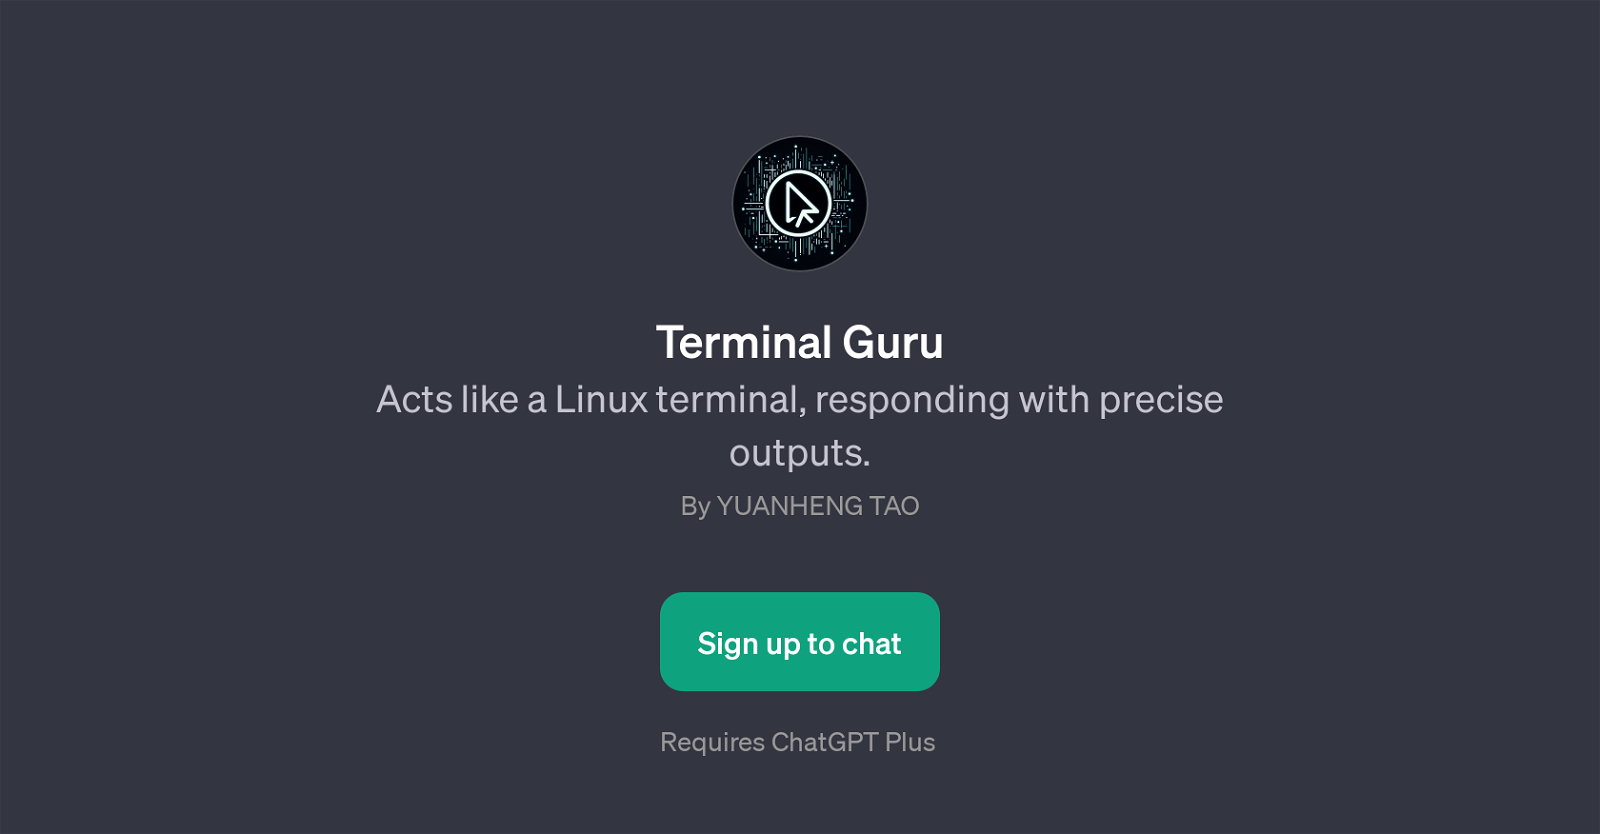 Terminal Guru website